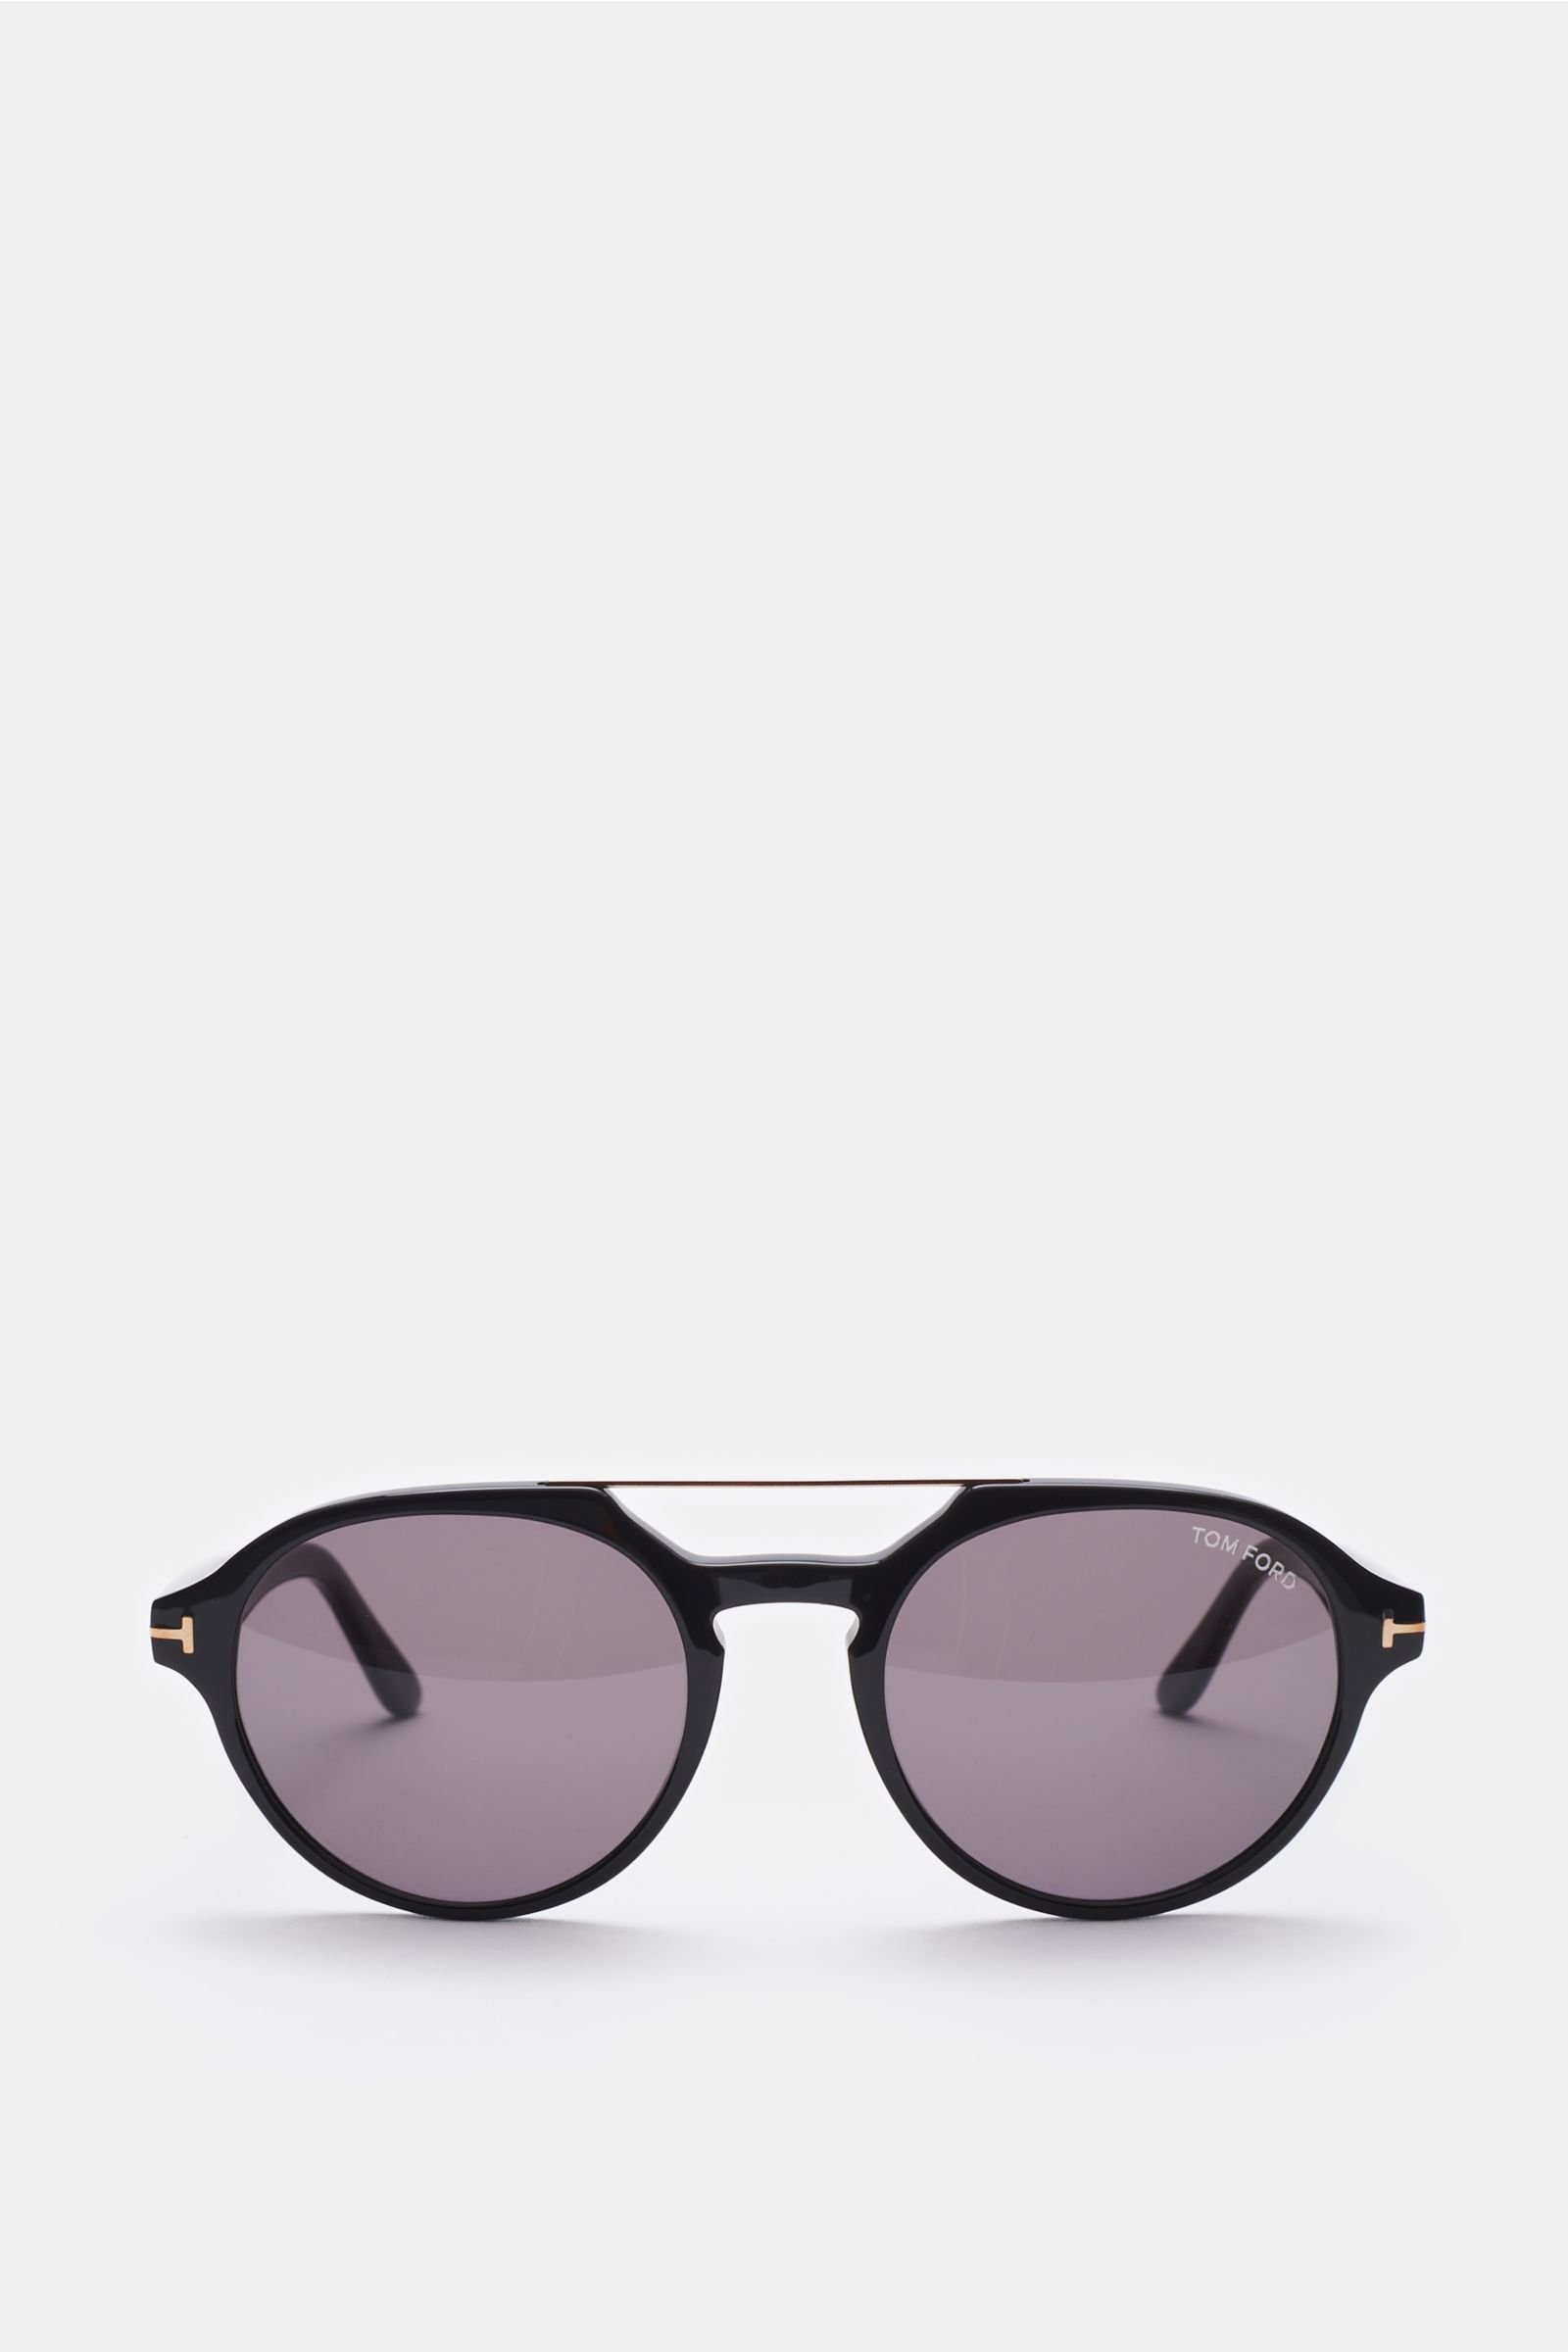 Sunglasses 'Stan' black/grey